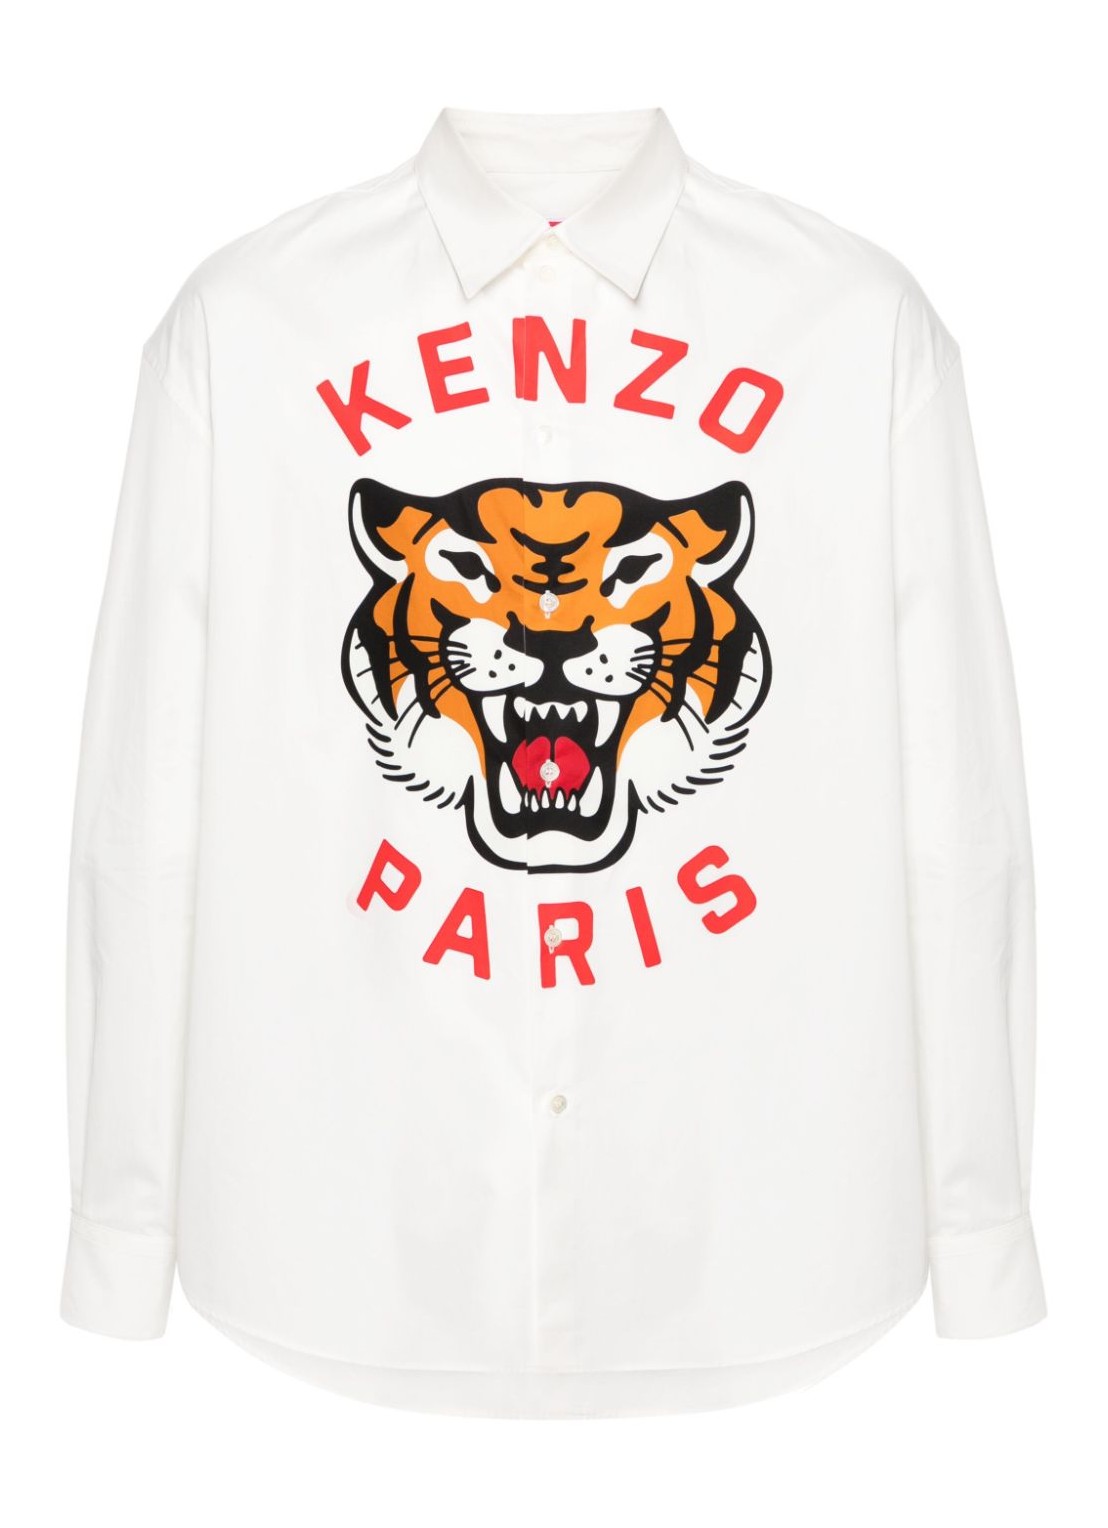 Camiseria kenzo shirt man kenzo lucky tiger shirt fe55ch4209p7 01 talla 42
 